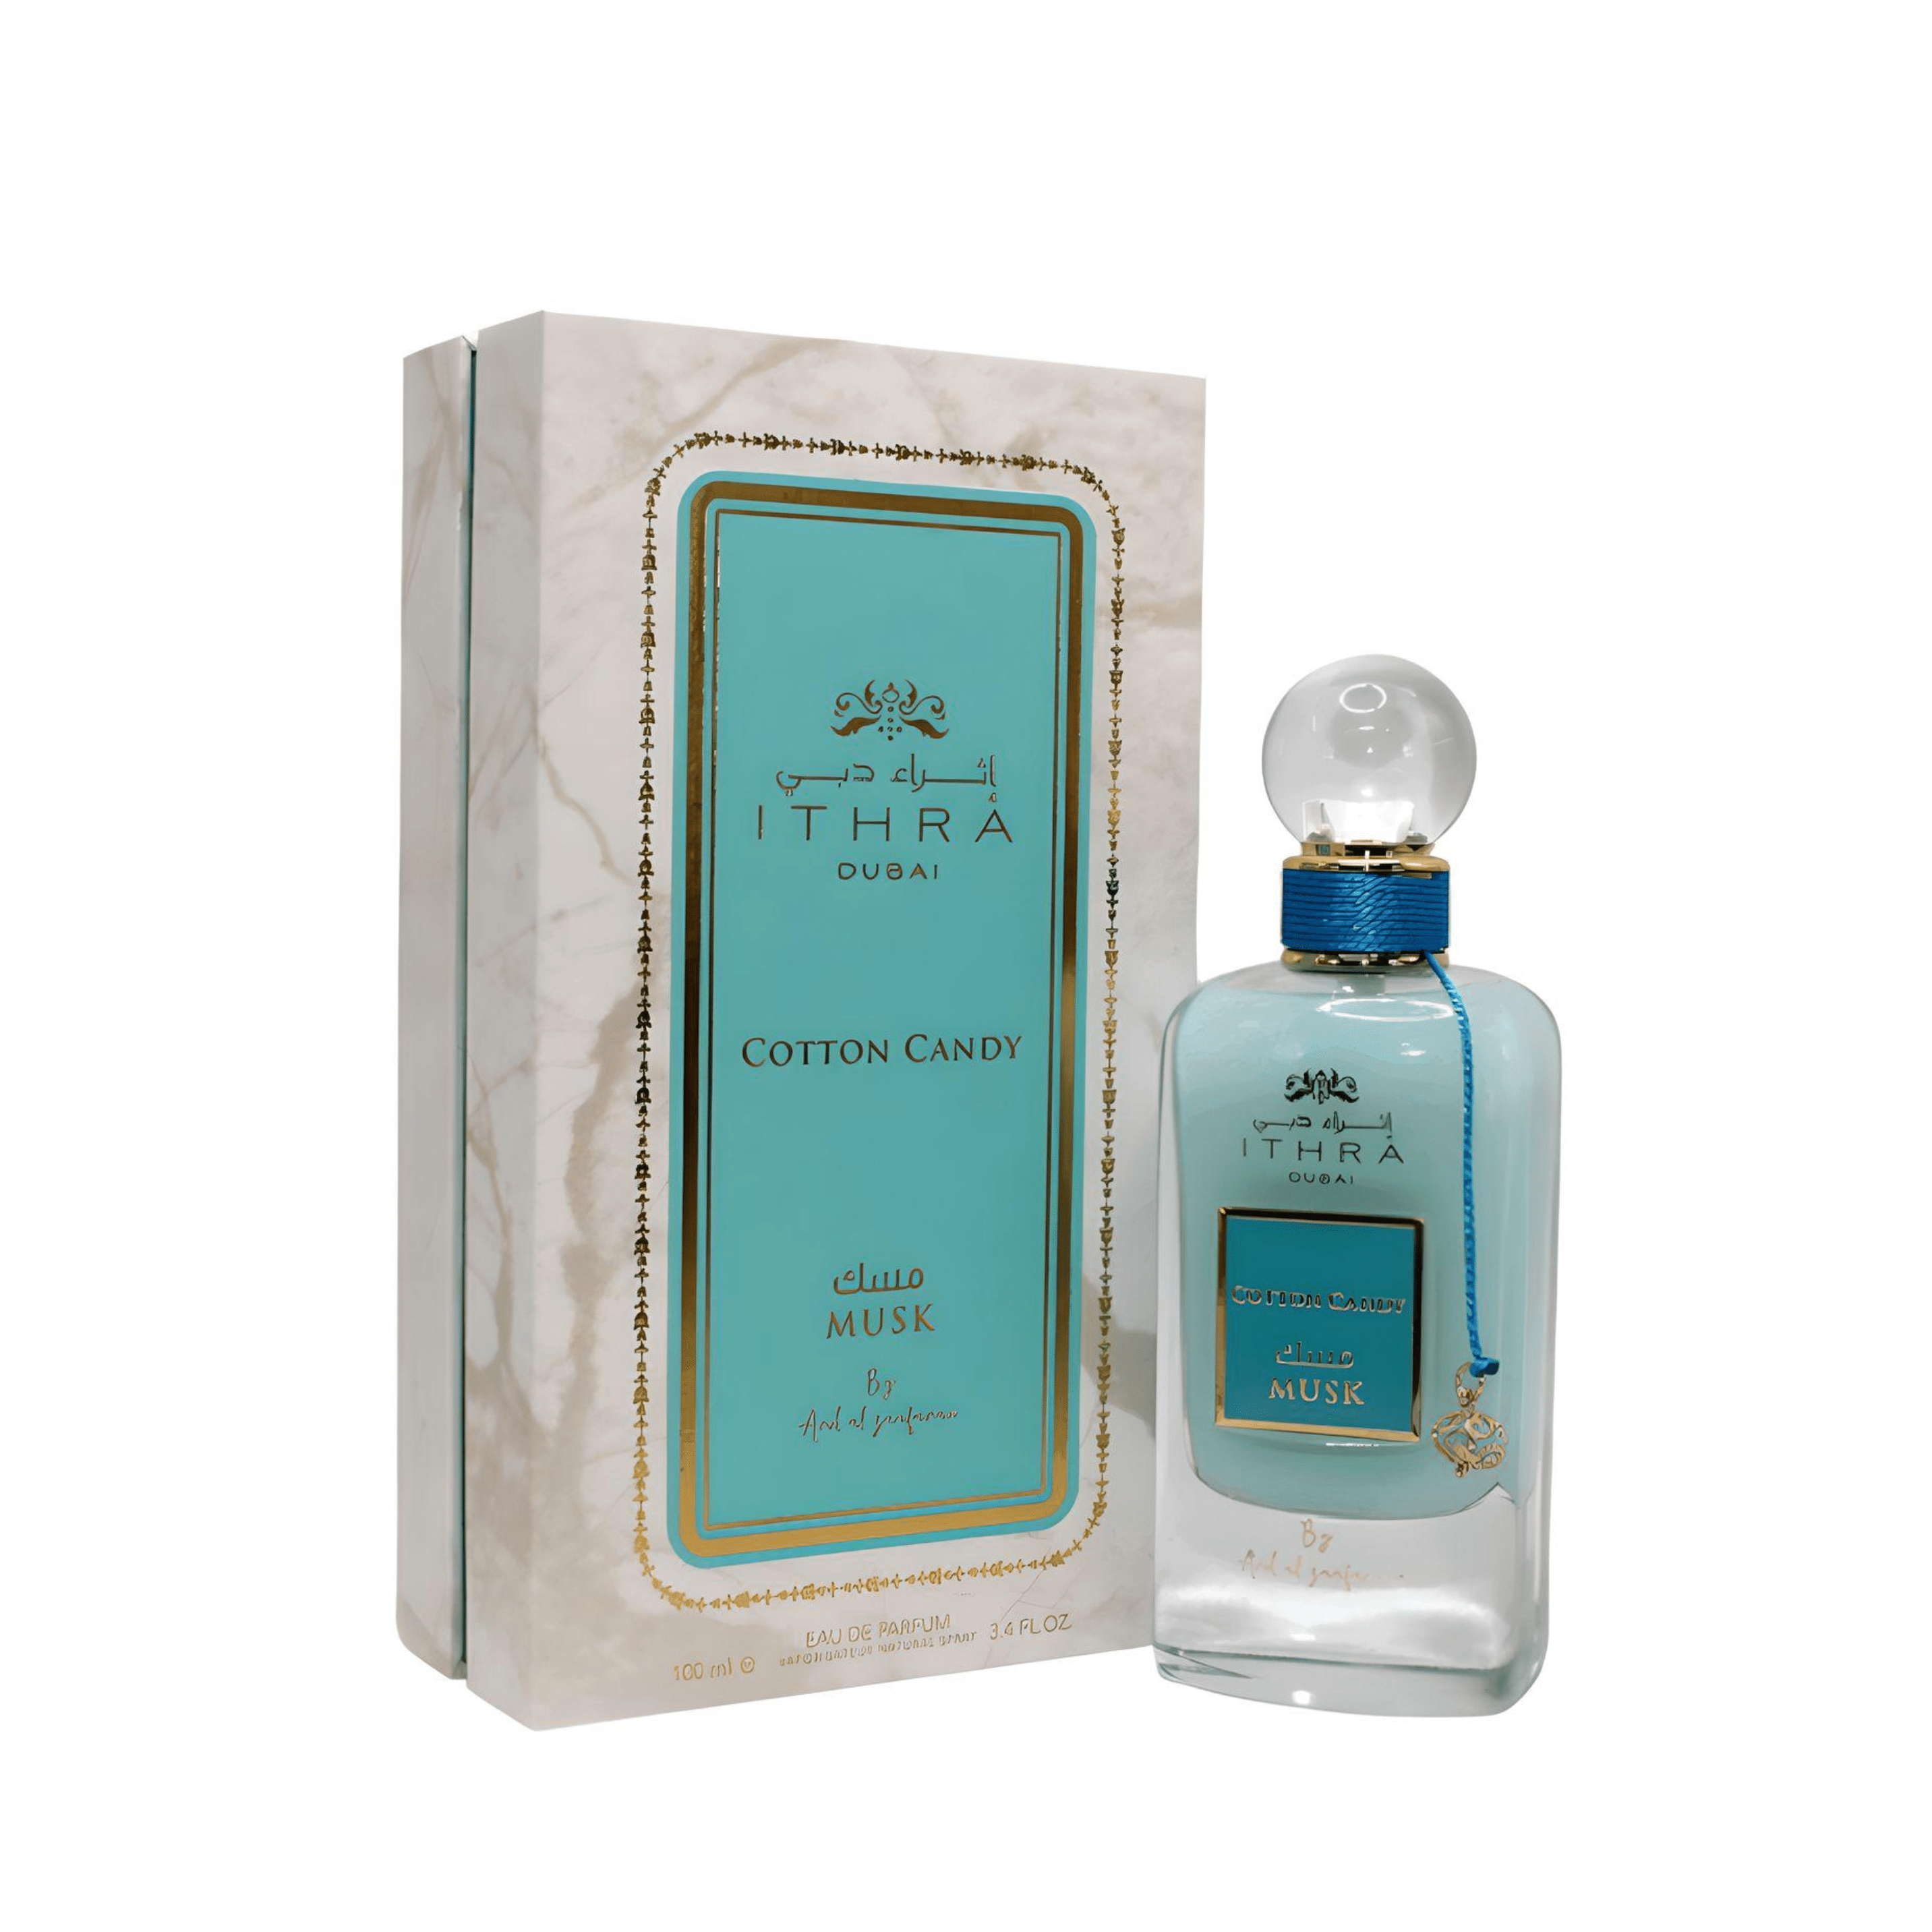 Cotton Candy (Ithra Dubai Musk) Perfume / Eau De Parfum 100Ml By Ard Al Zaafaran